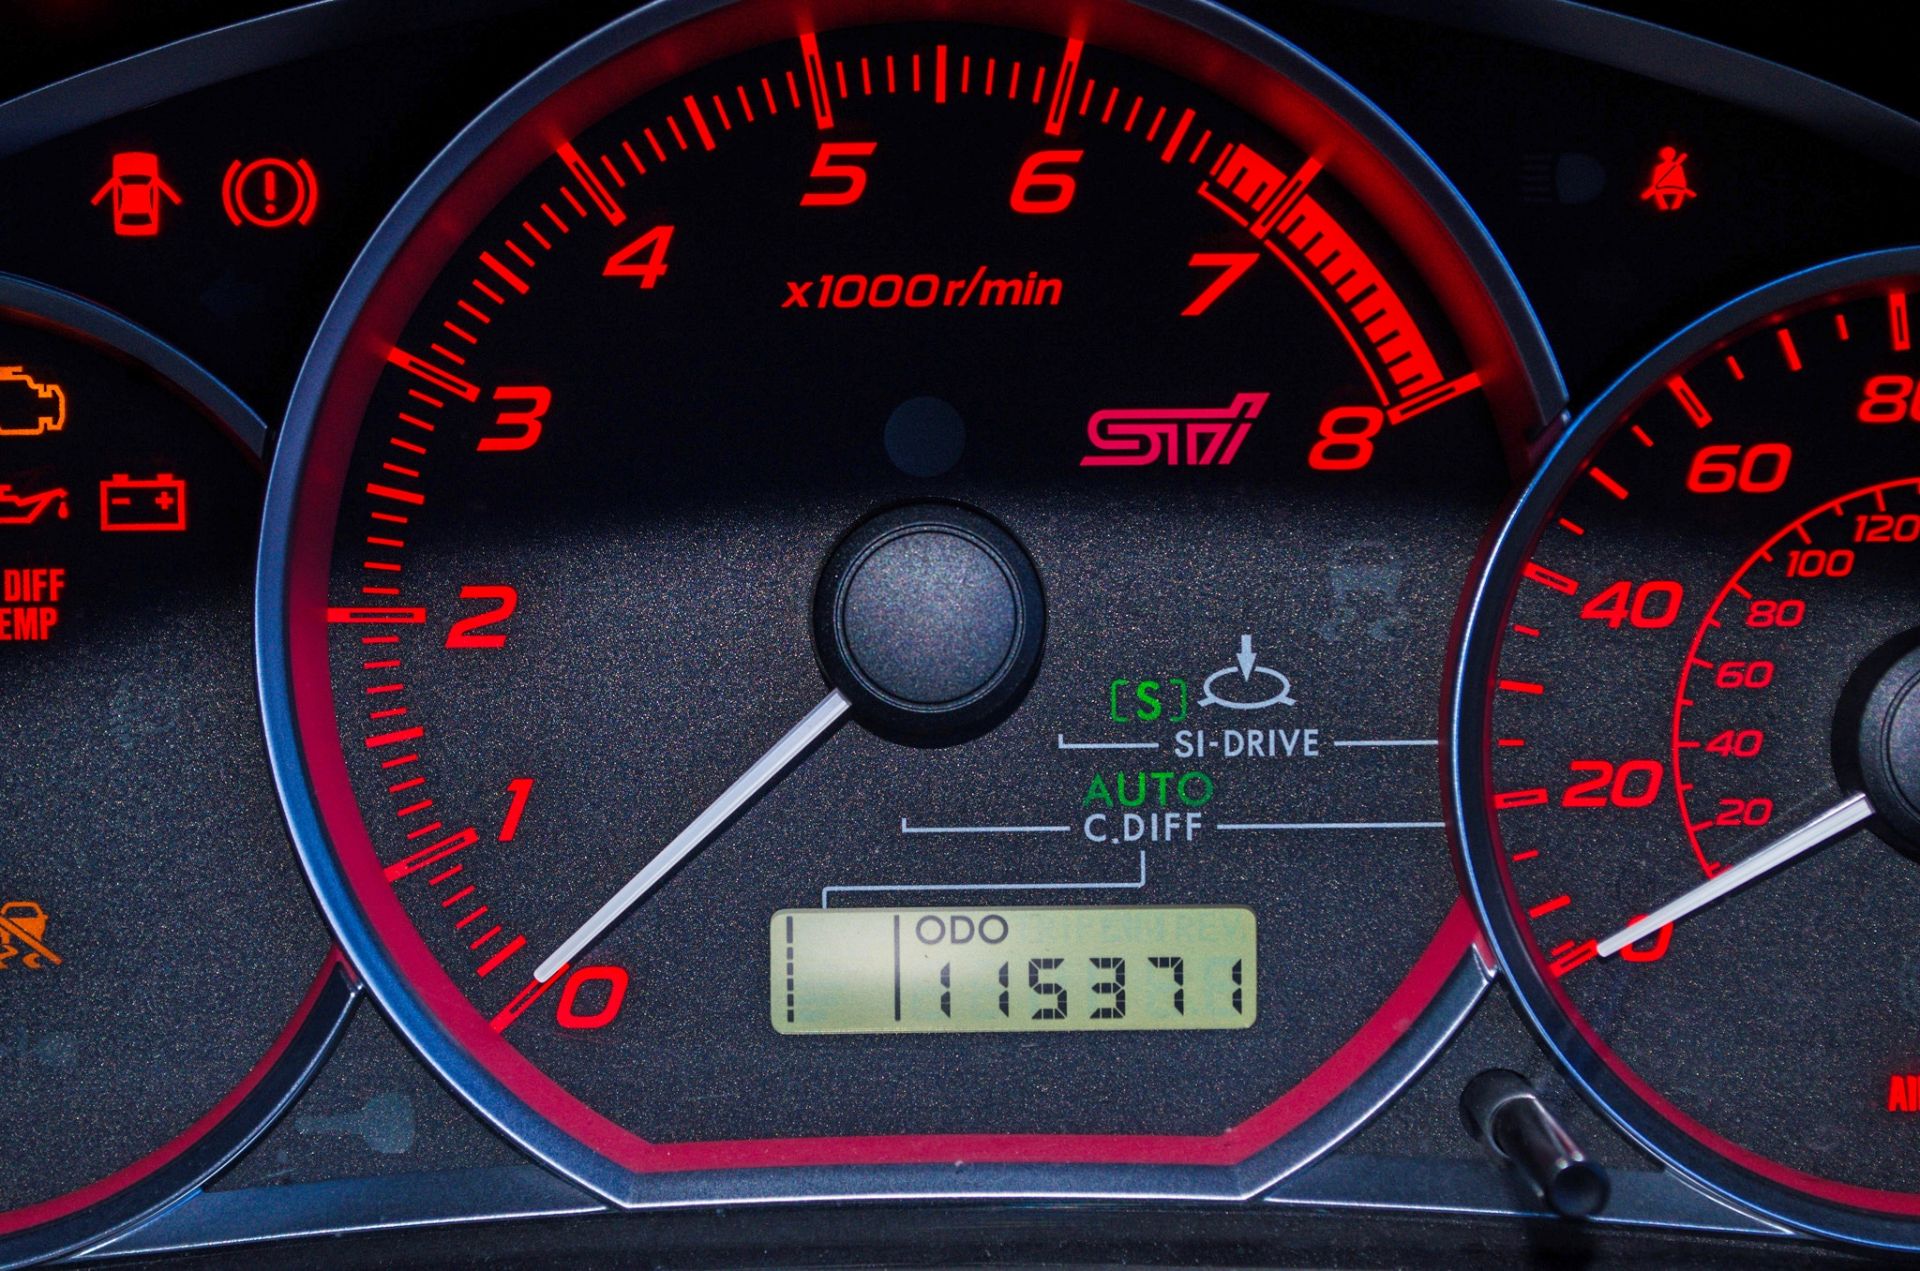 2011 Subaru Impreza WRX STI-TP UK AWD 2.5 litre turbo 4 door saloon car - Image 53 of 57